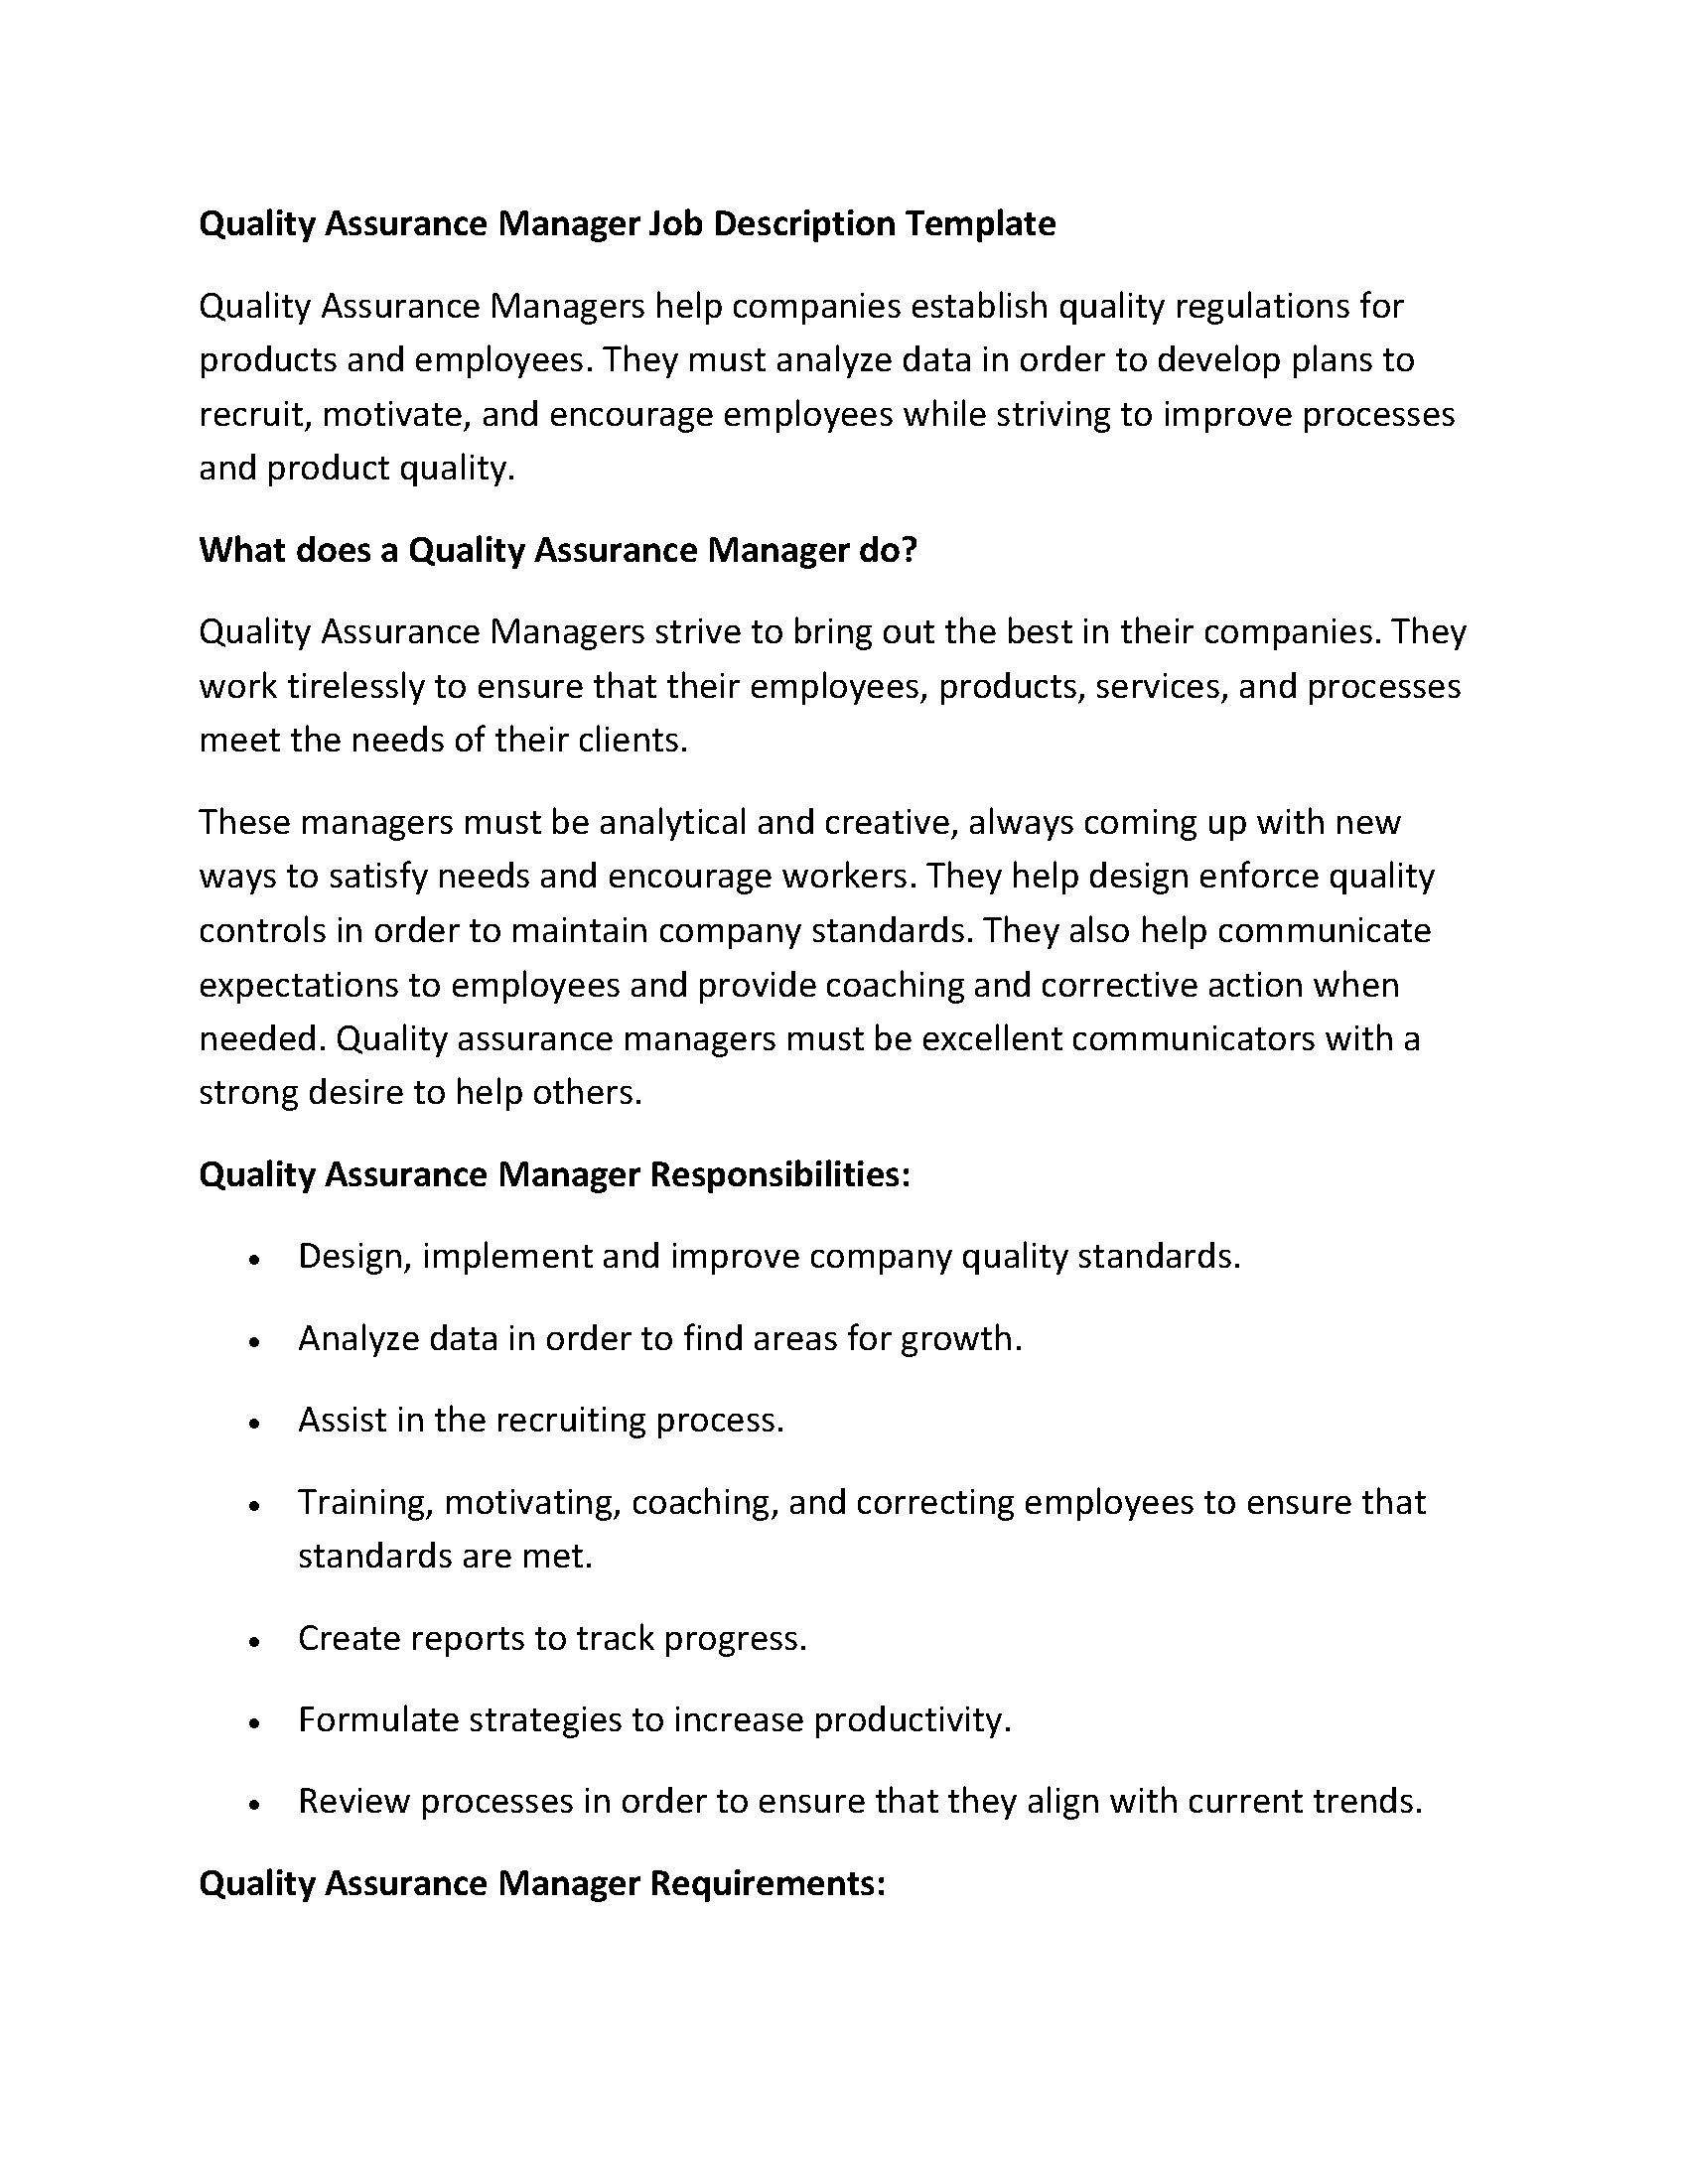 Quality Assurance Manager Job Description Template